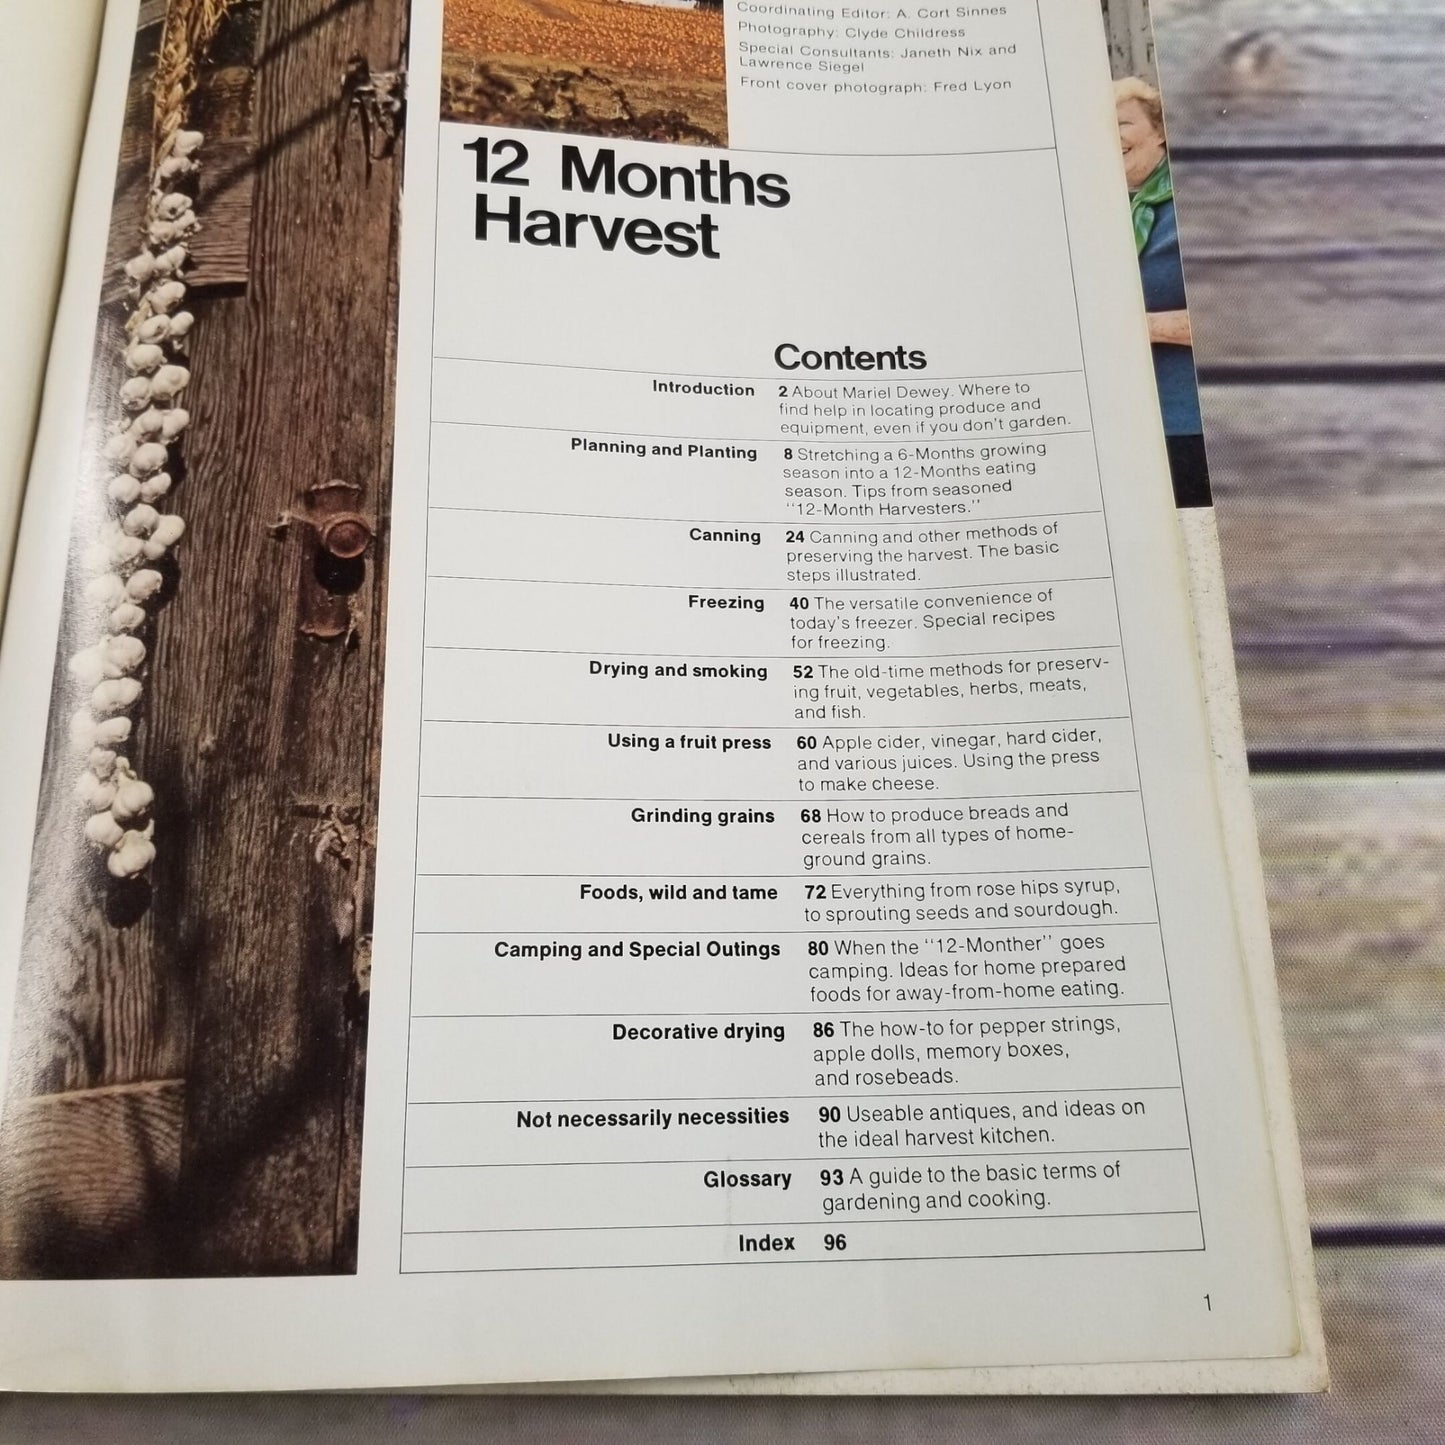 Vintage Cookbook 12 Months Harvest 1978 Canning Drying Freezing Smoking Recipes Ortho Books Chevron Paperback Planting Grinding